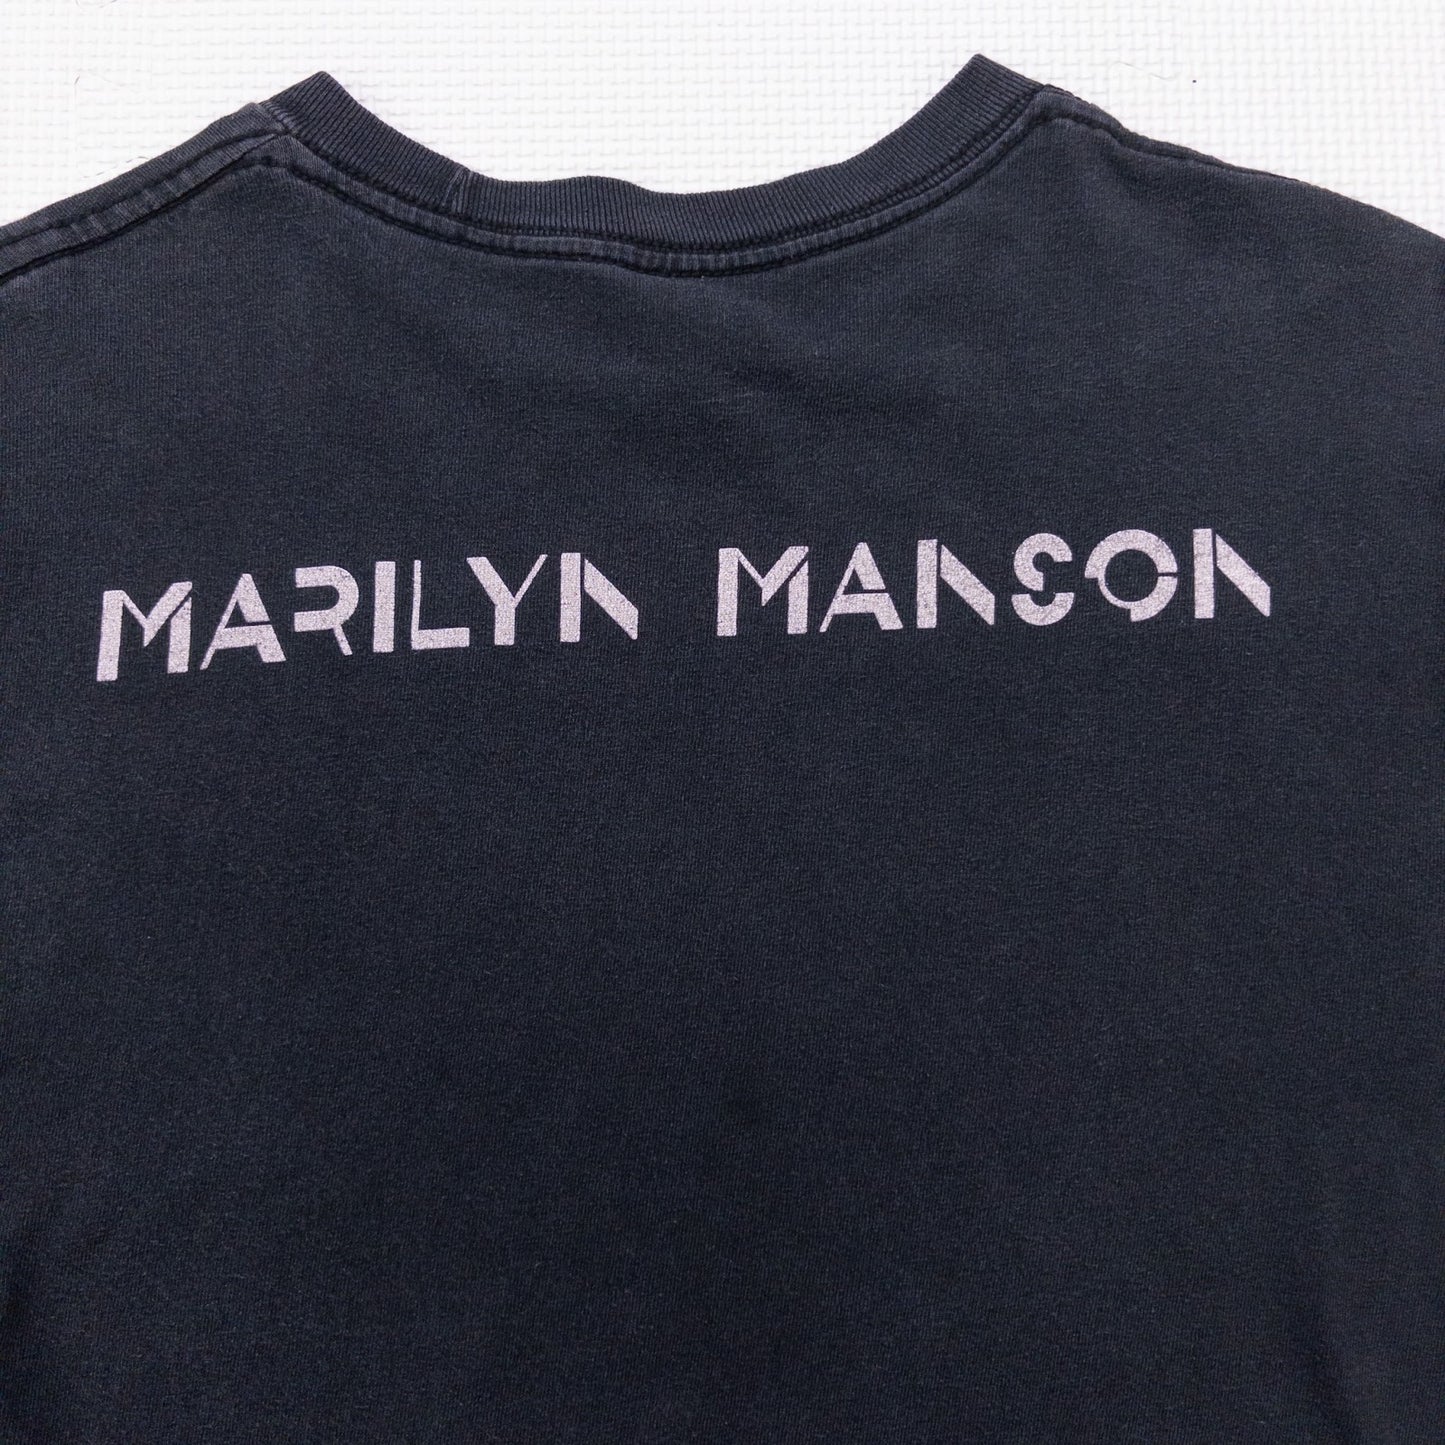 10s ”MARILYN MANSON” M